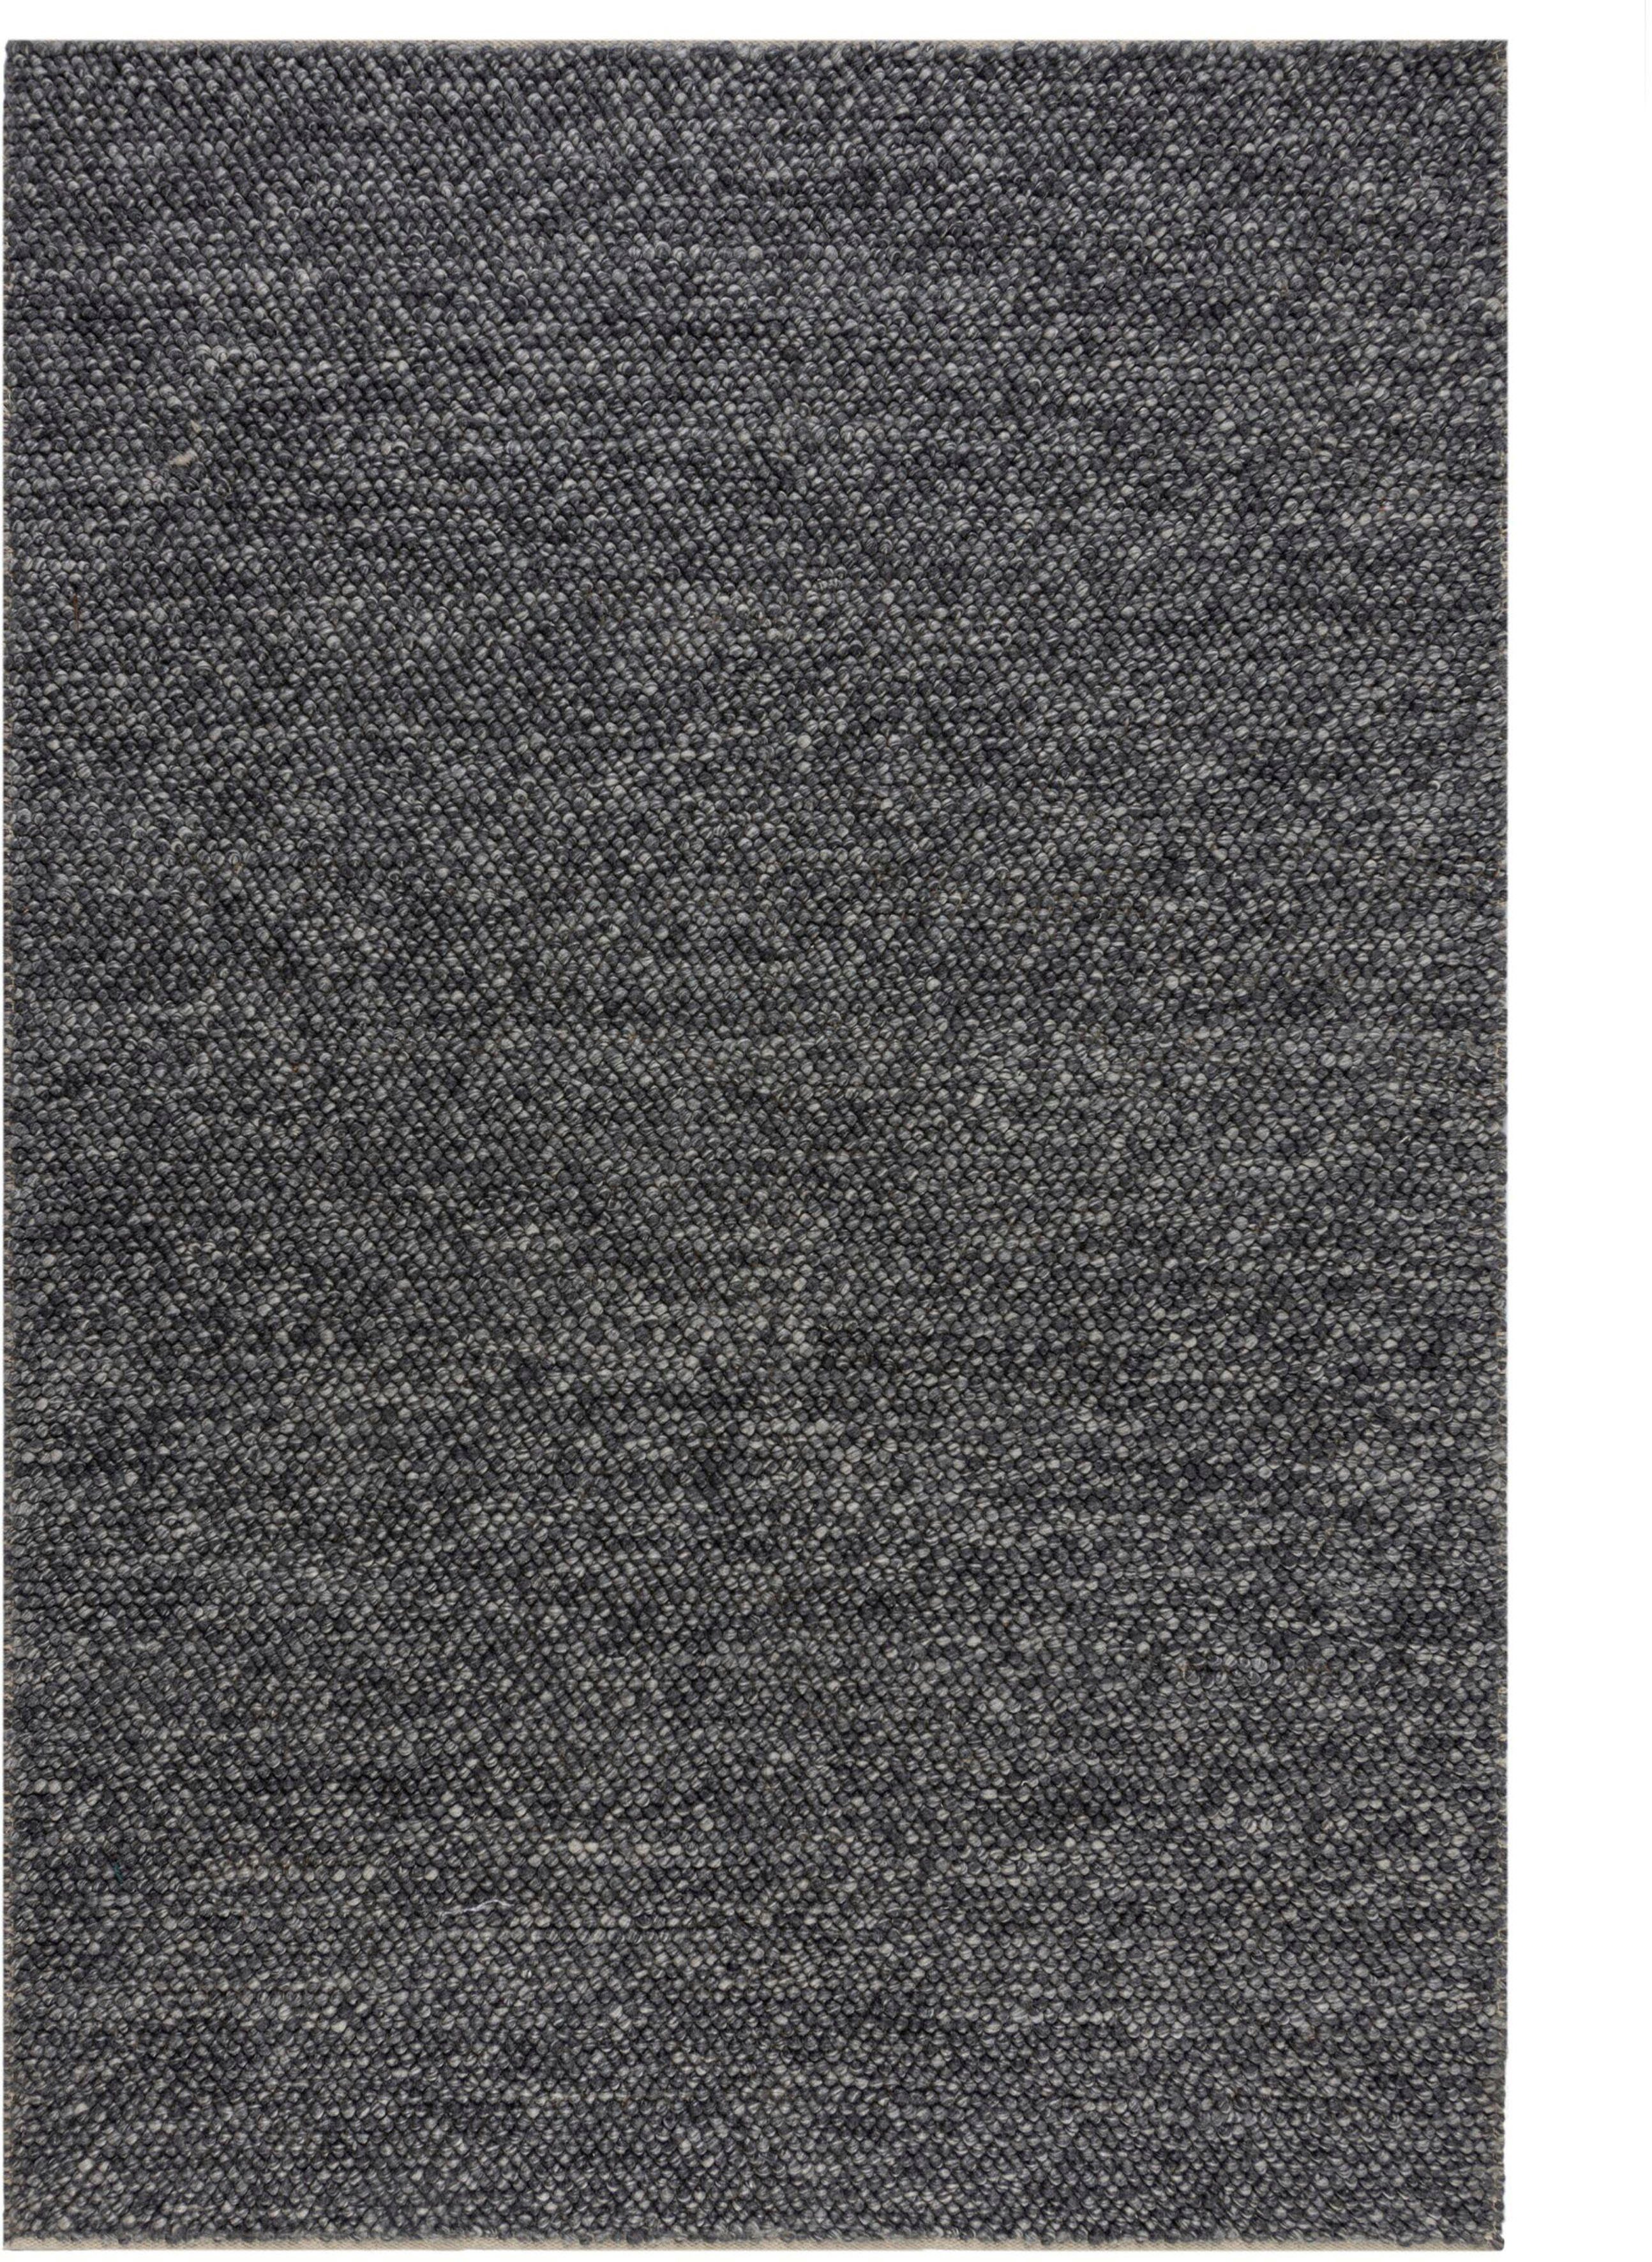 Teppich Minerals, FLAIR RUGS, rechteckig, Höhe: 10 mm, Teppich aus Wollmischung, geknüpftes Design, meliert dunkelgrau